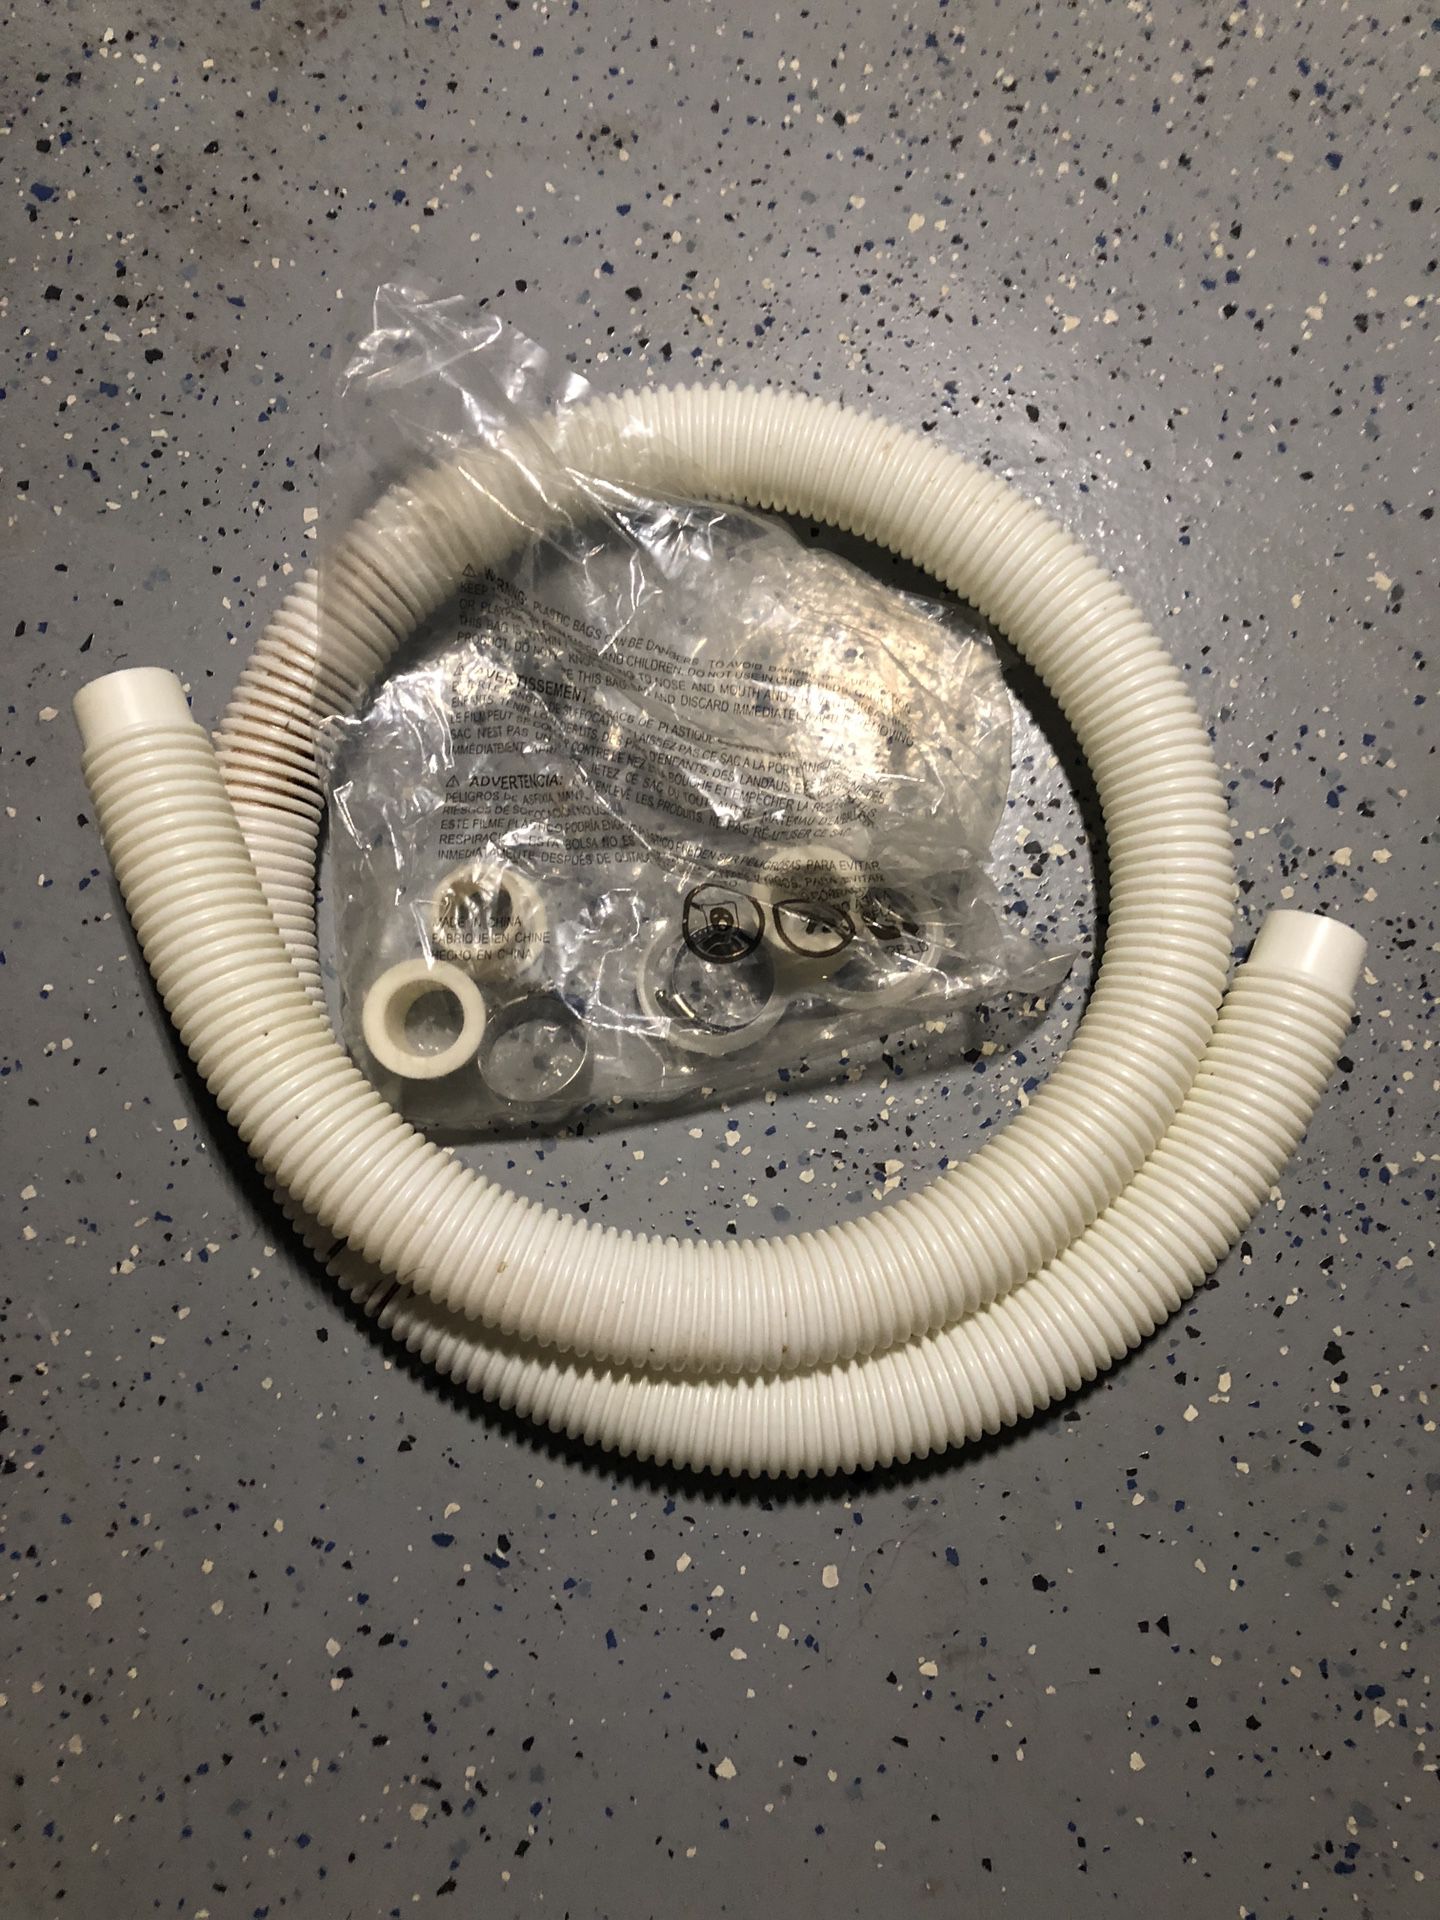 Replacement pool hose kit